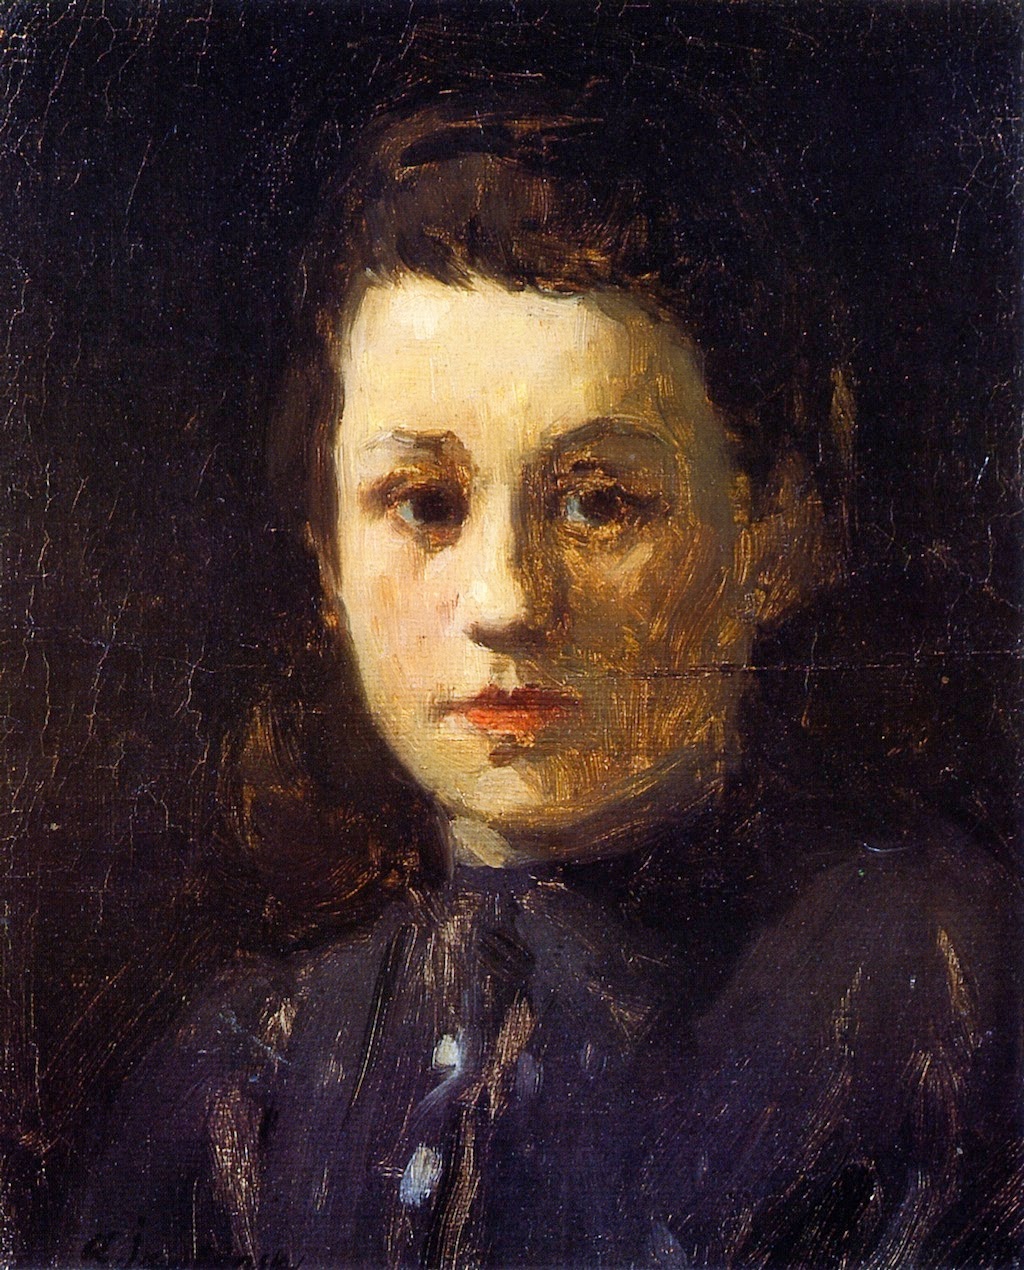 Alexej G Jawlensky (1864–1941) – The Woman Gallery